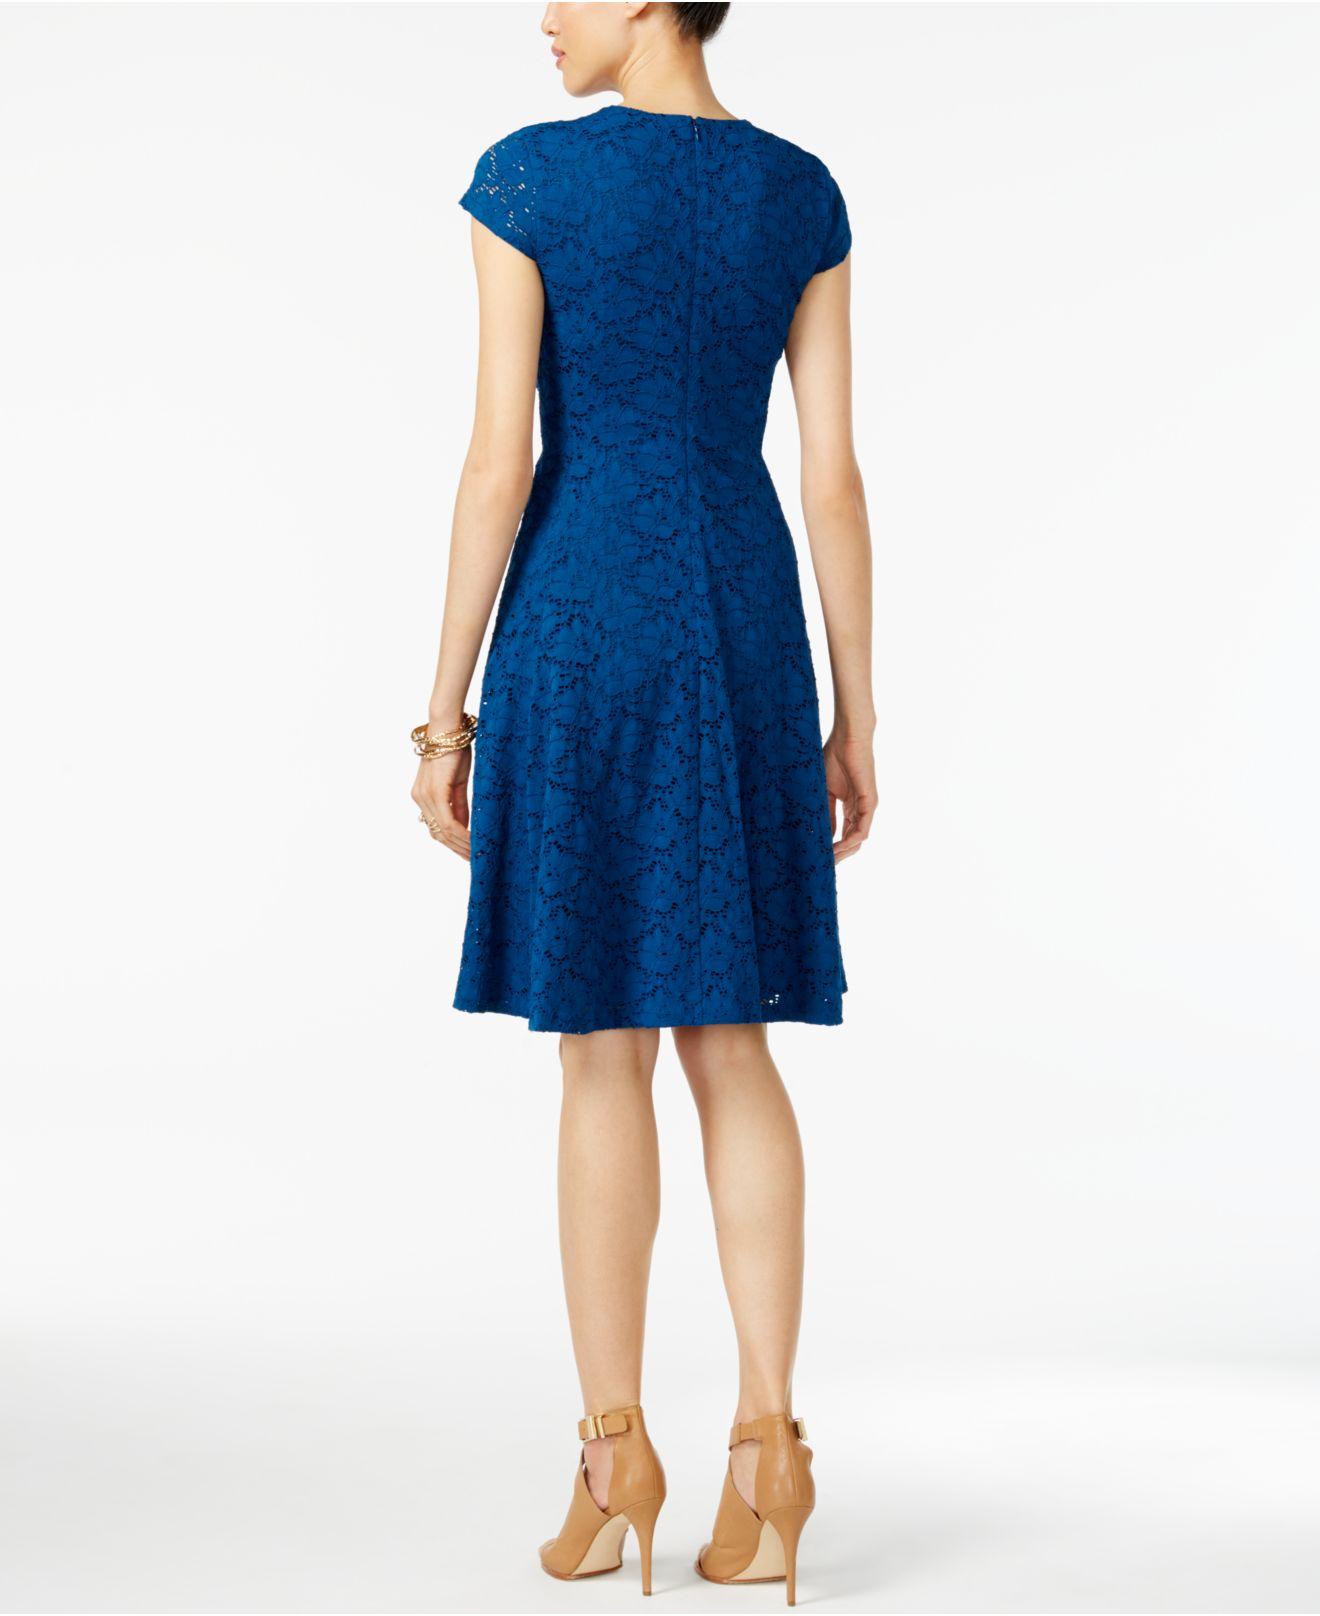 Alfani Lace Fit & Flare Dress in Blue - Lyst